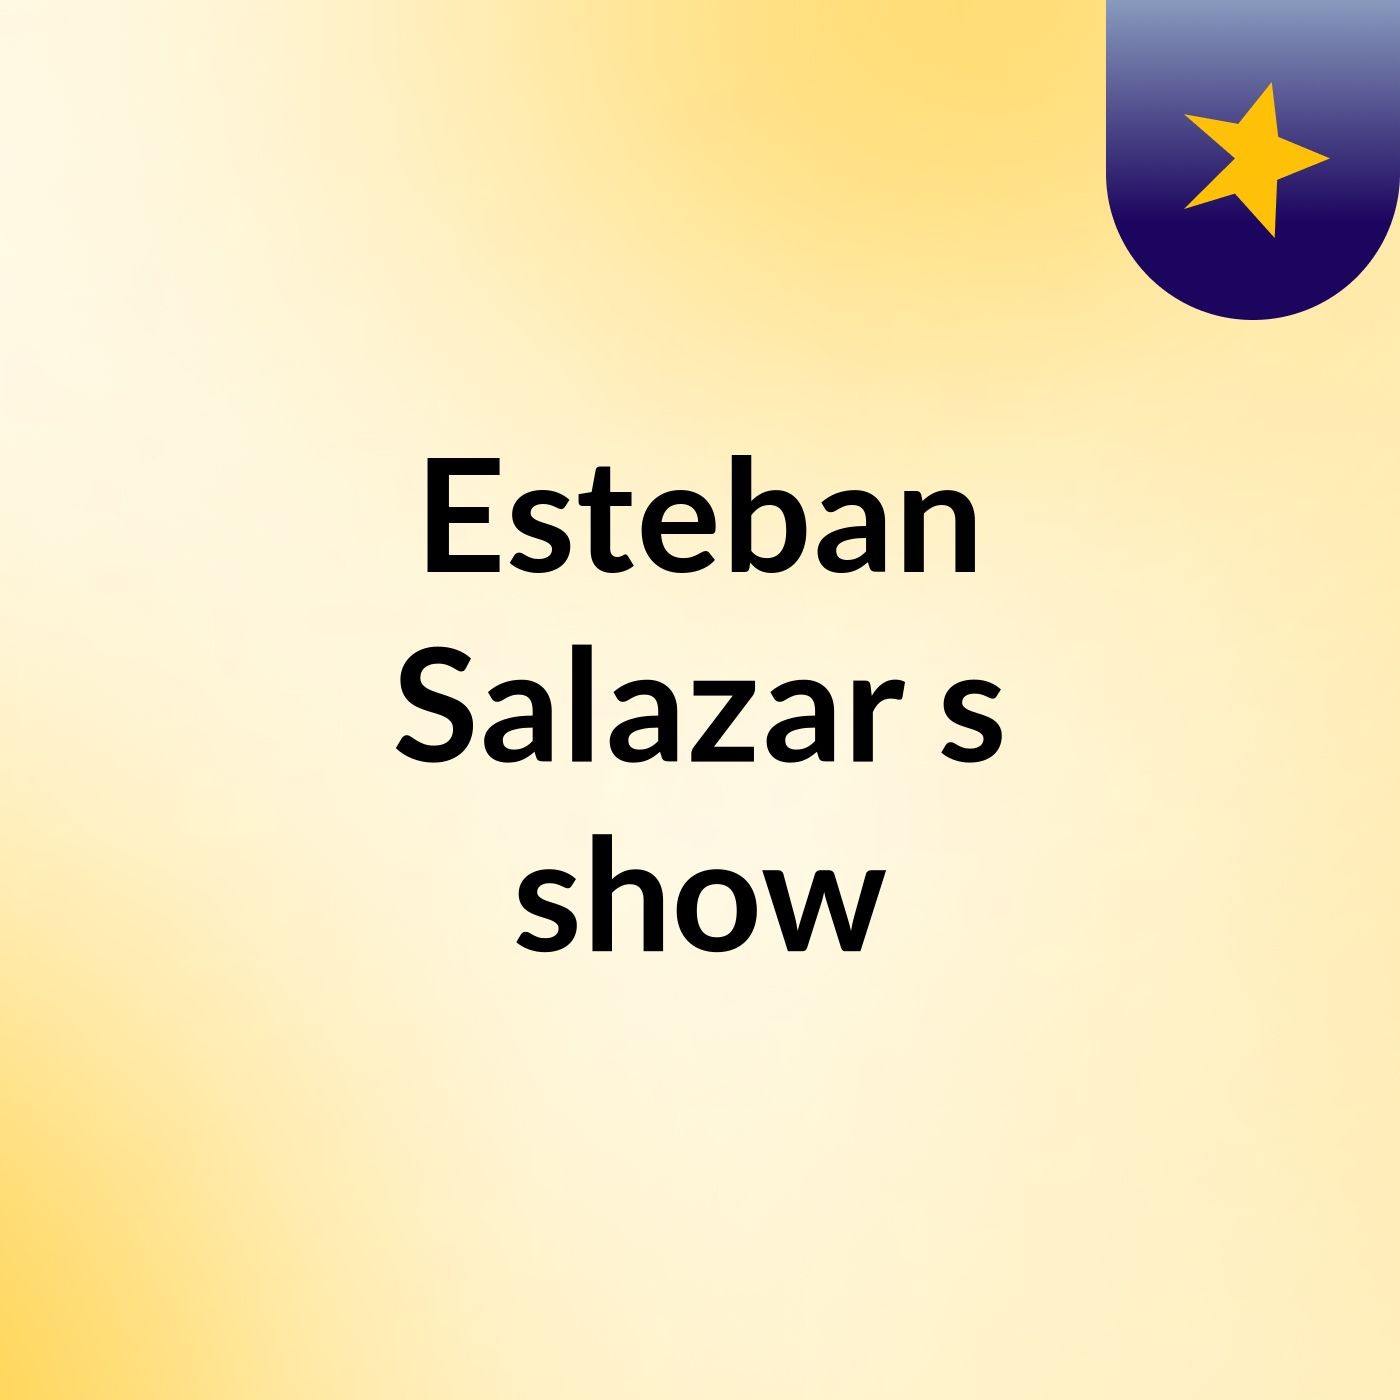 Esteban Salazar's show